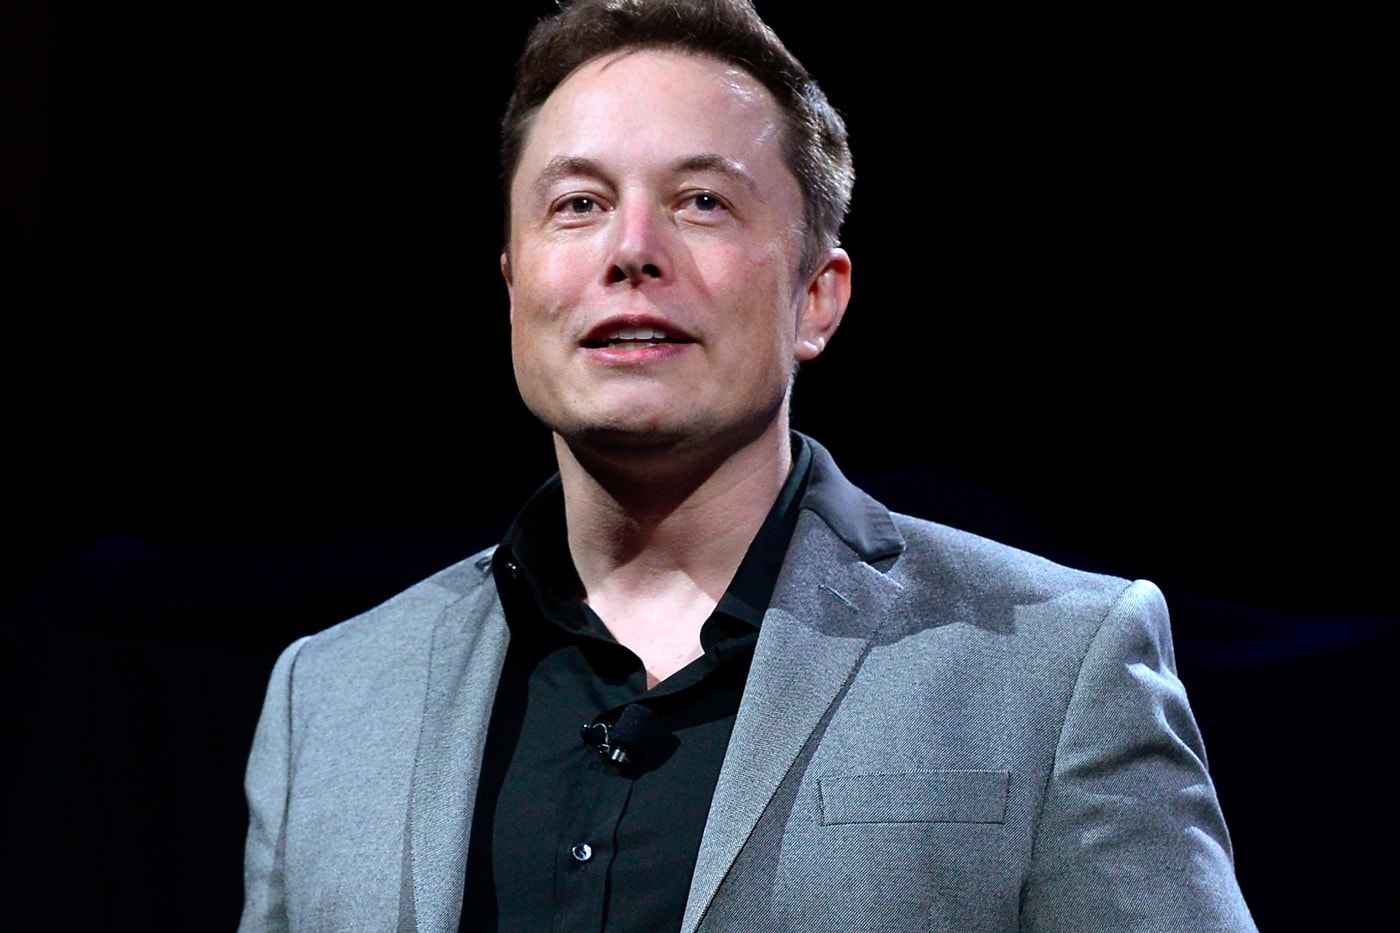 Elon Musk bill gates richest man in the world Bloomberg index